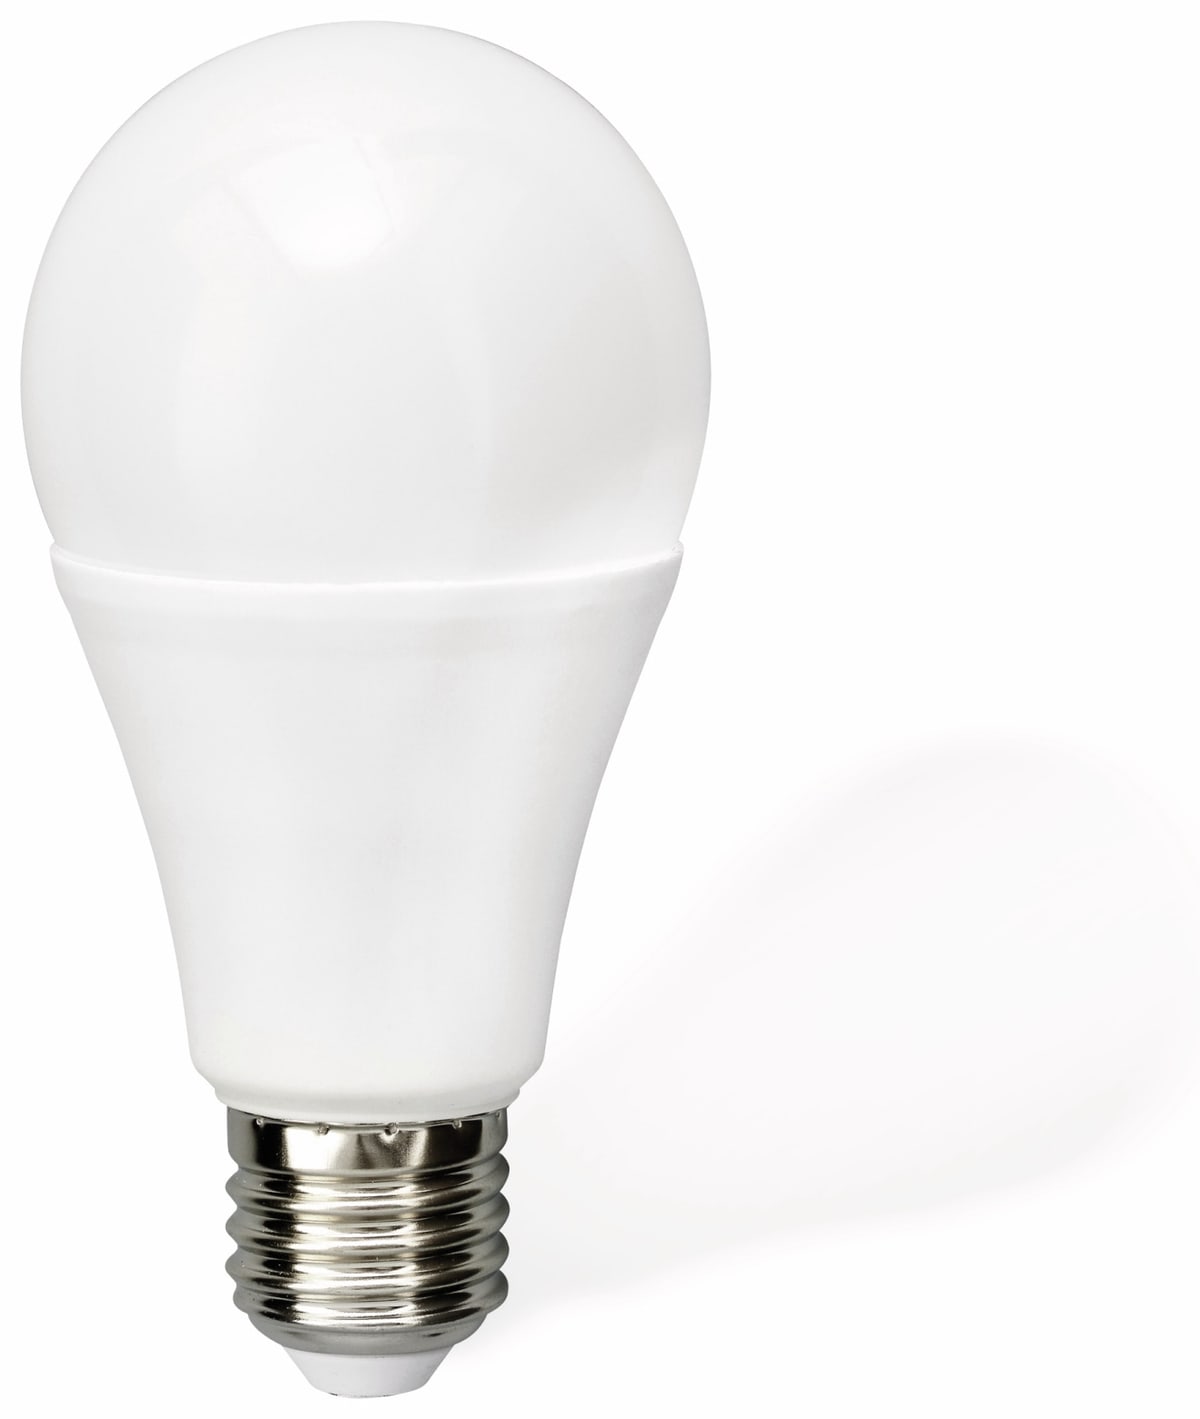 MÜLLER-LICHT LED-Lampe 400221, E27, EEK: E, 15 W, 1520 lm, 2700 K von Müller-Licht